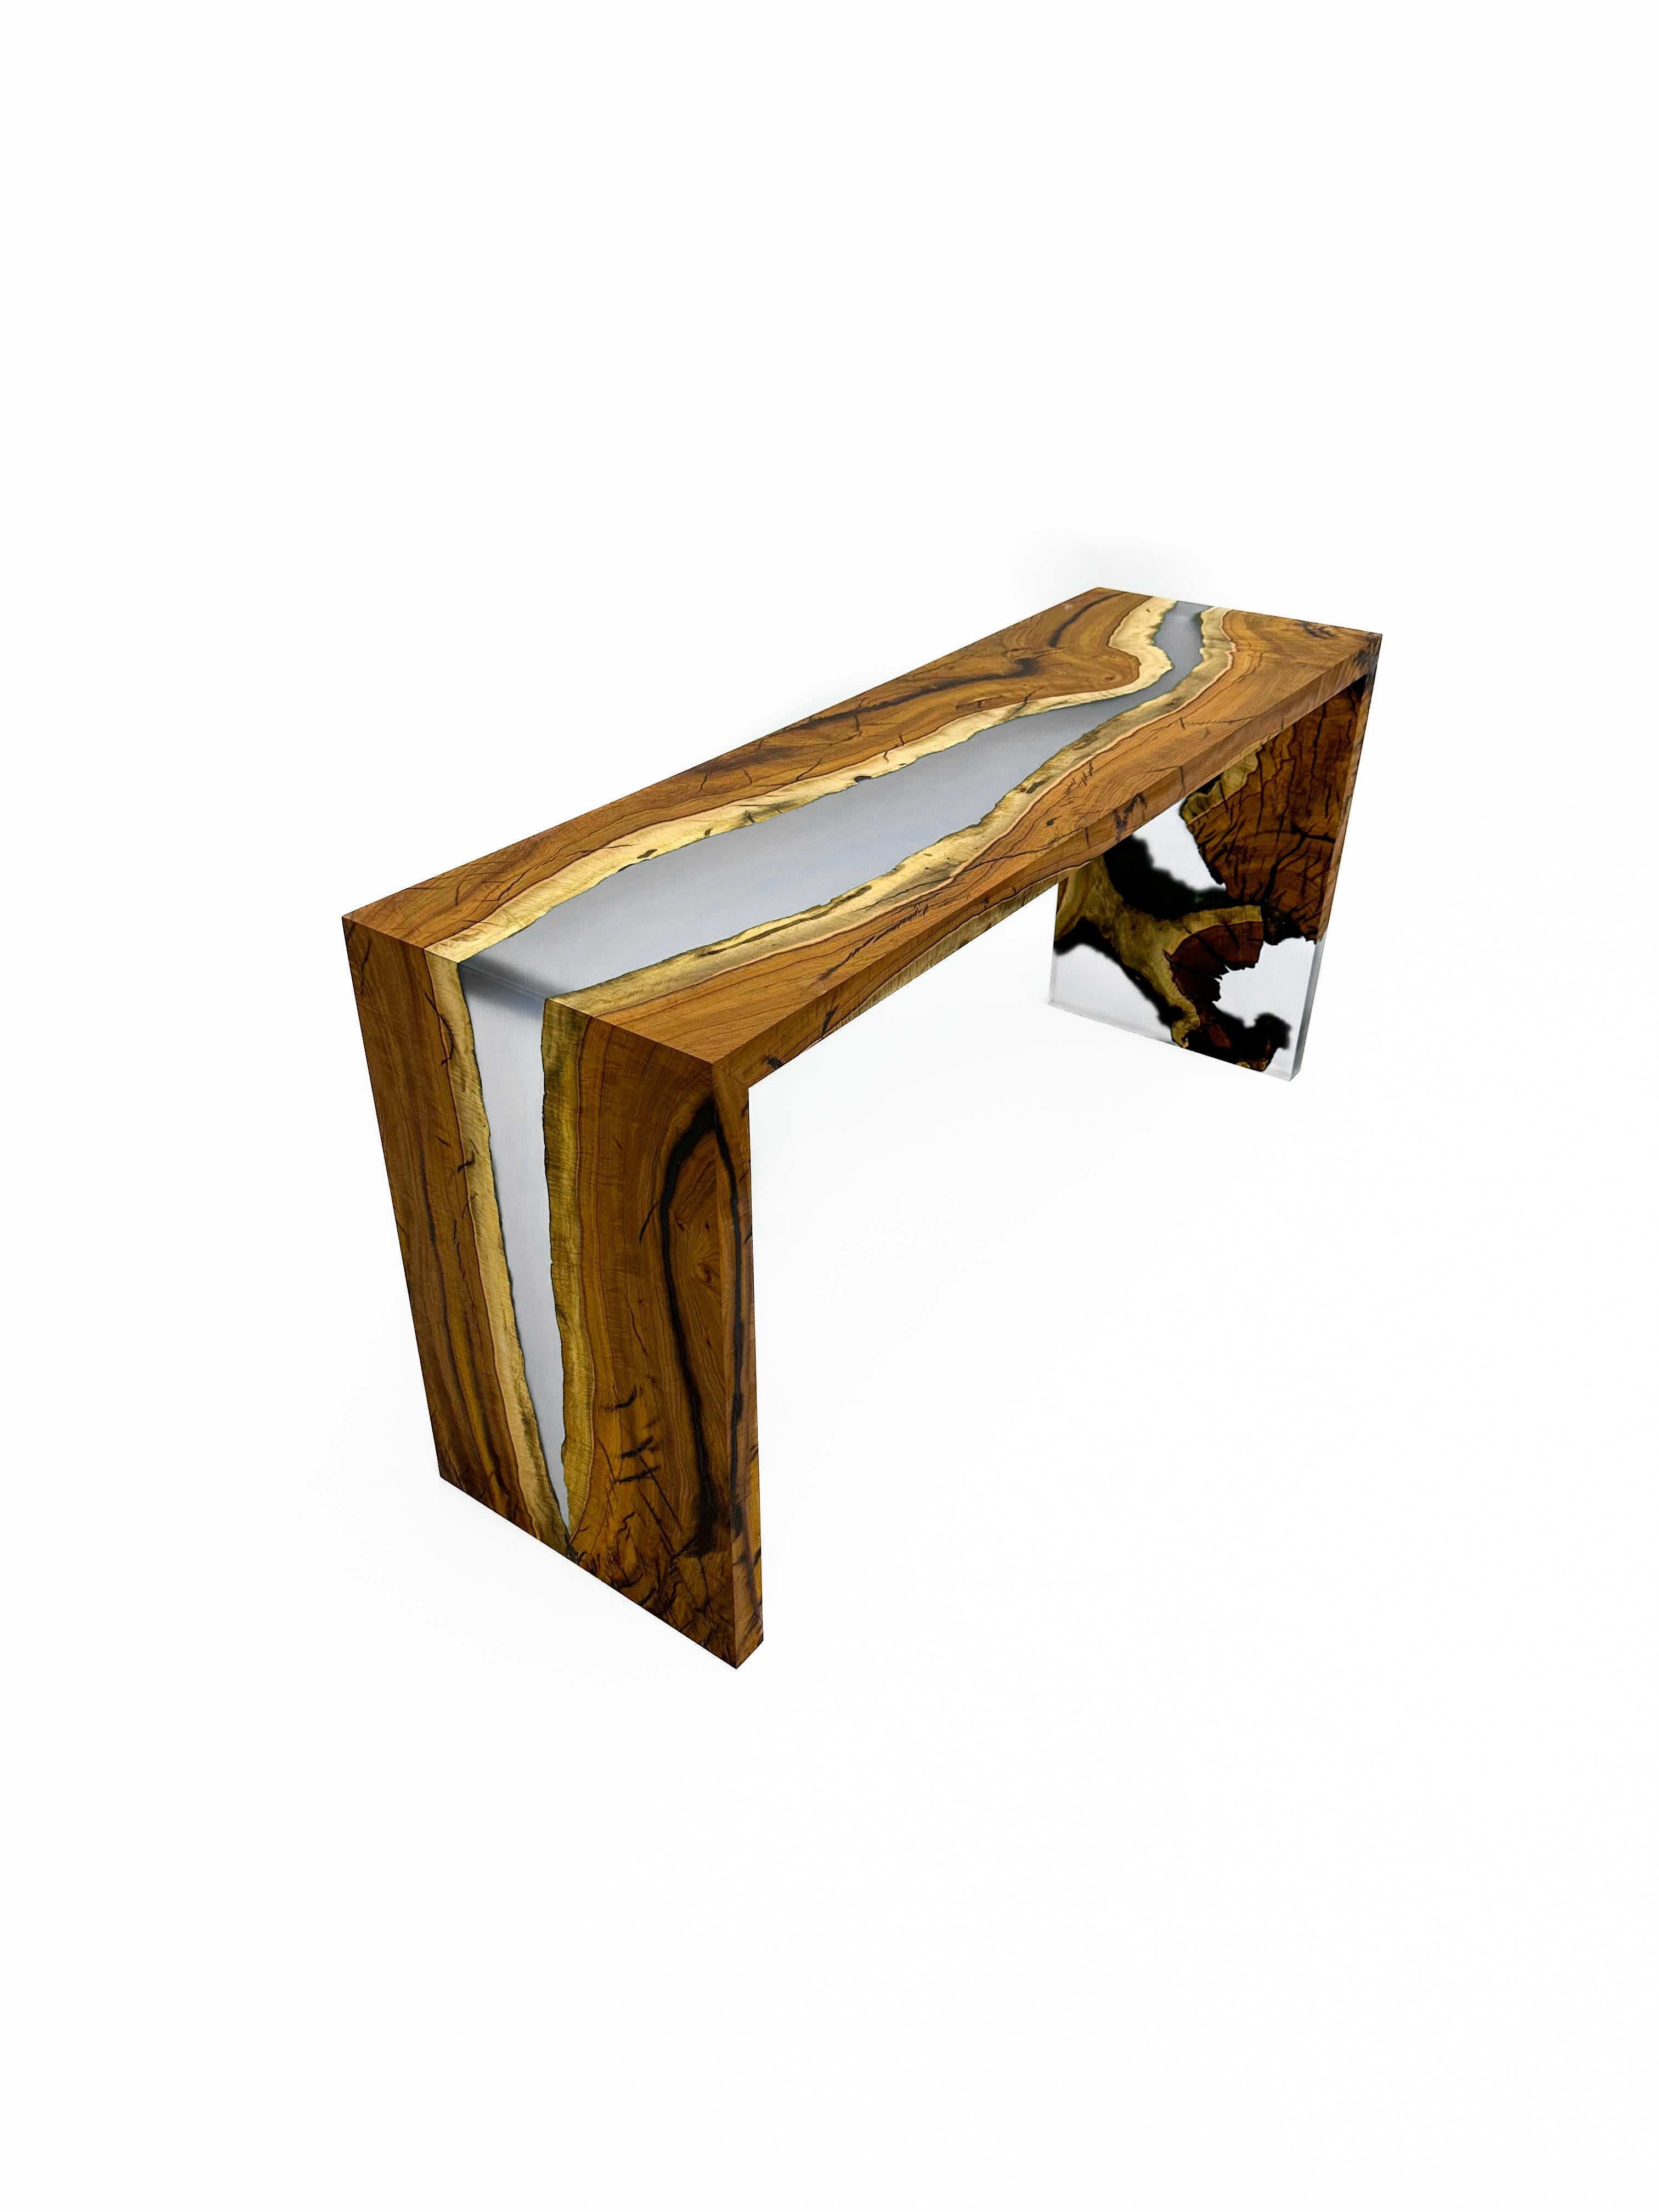 epoxy resin waterfall table